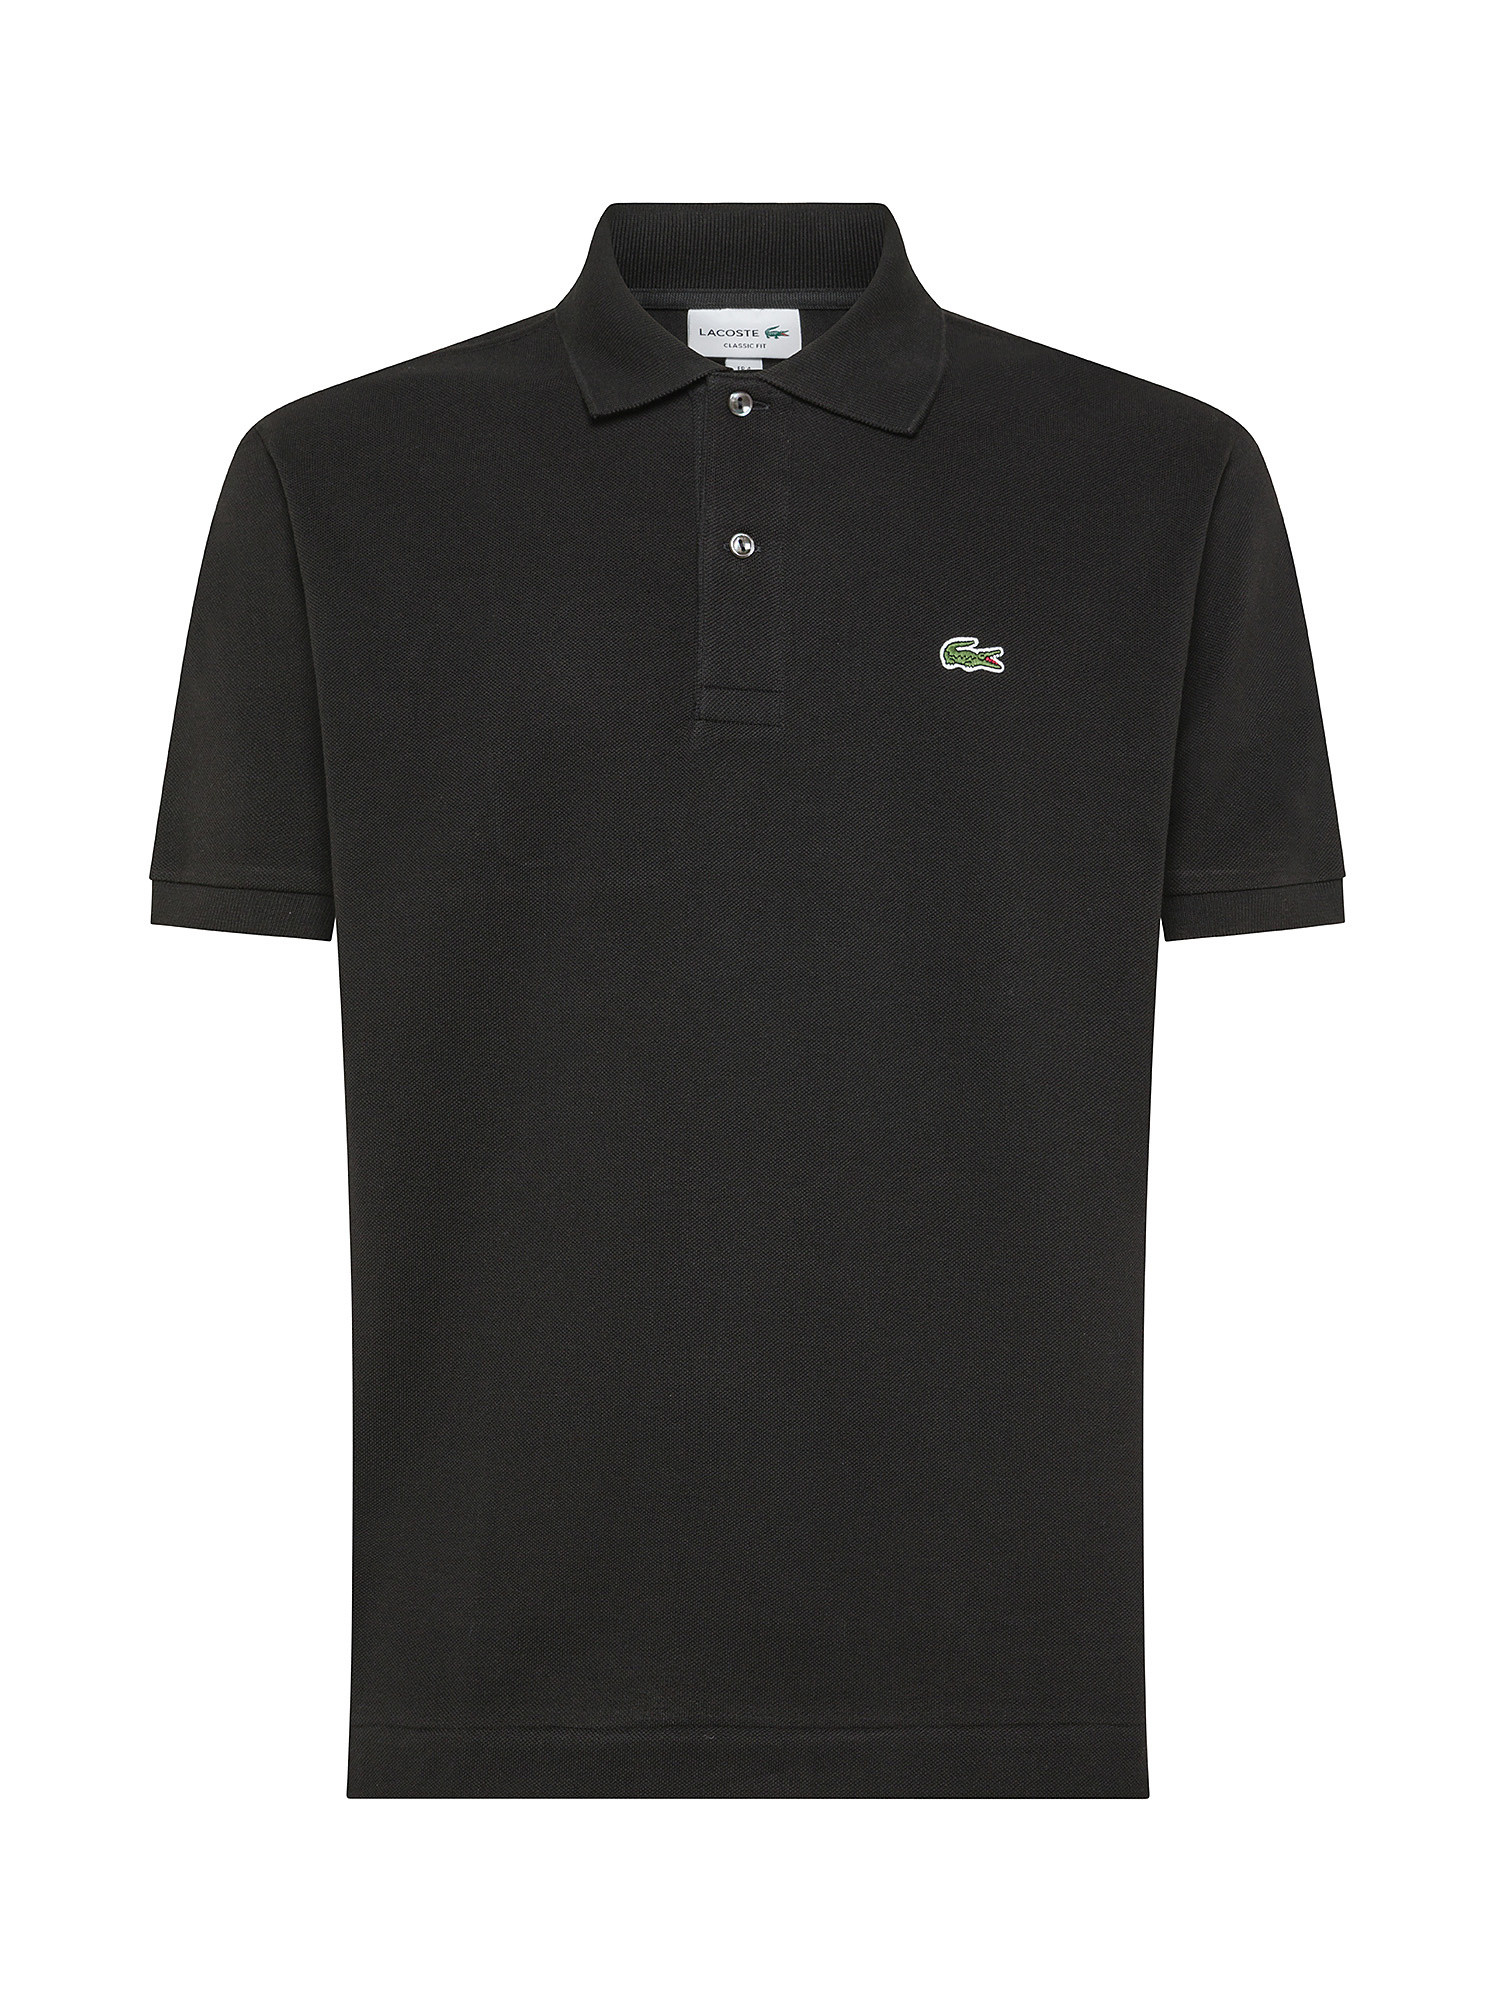 Lacoste - Classic cut polo shirt in petit piquè cotton, Black, large image number 0